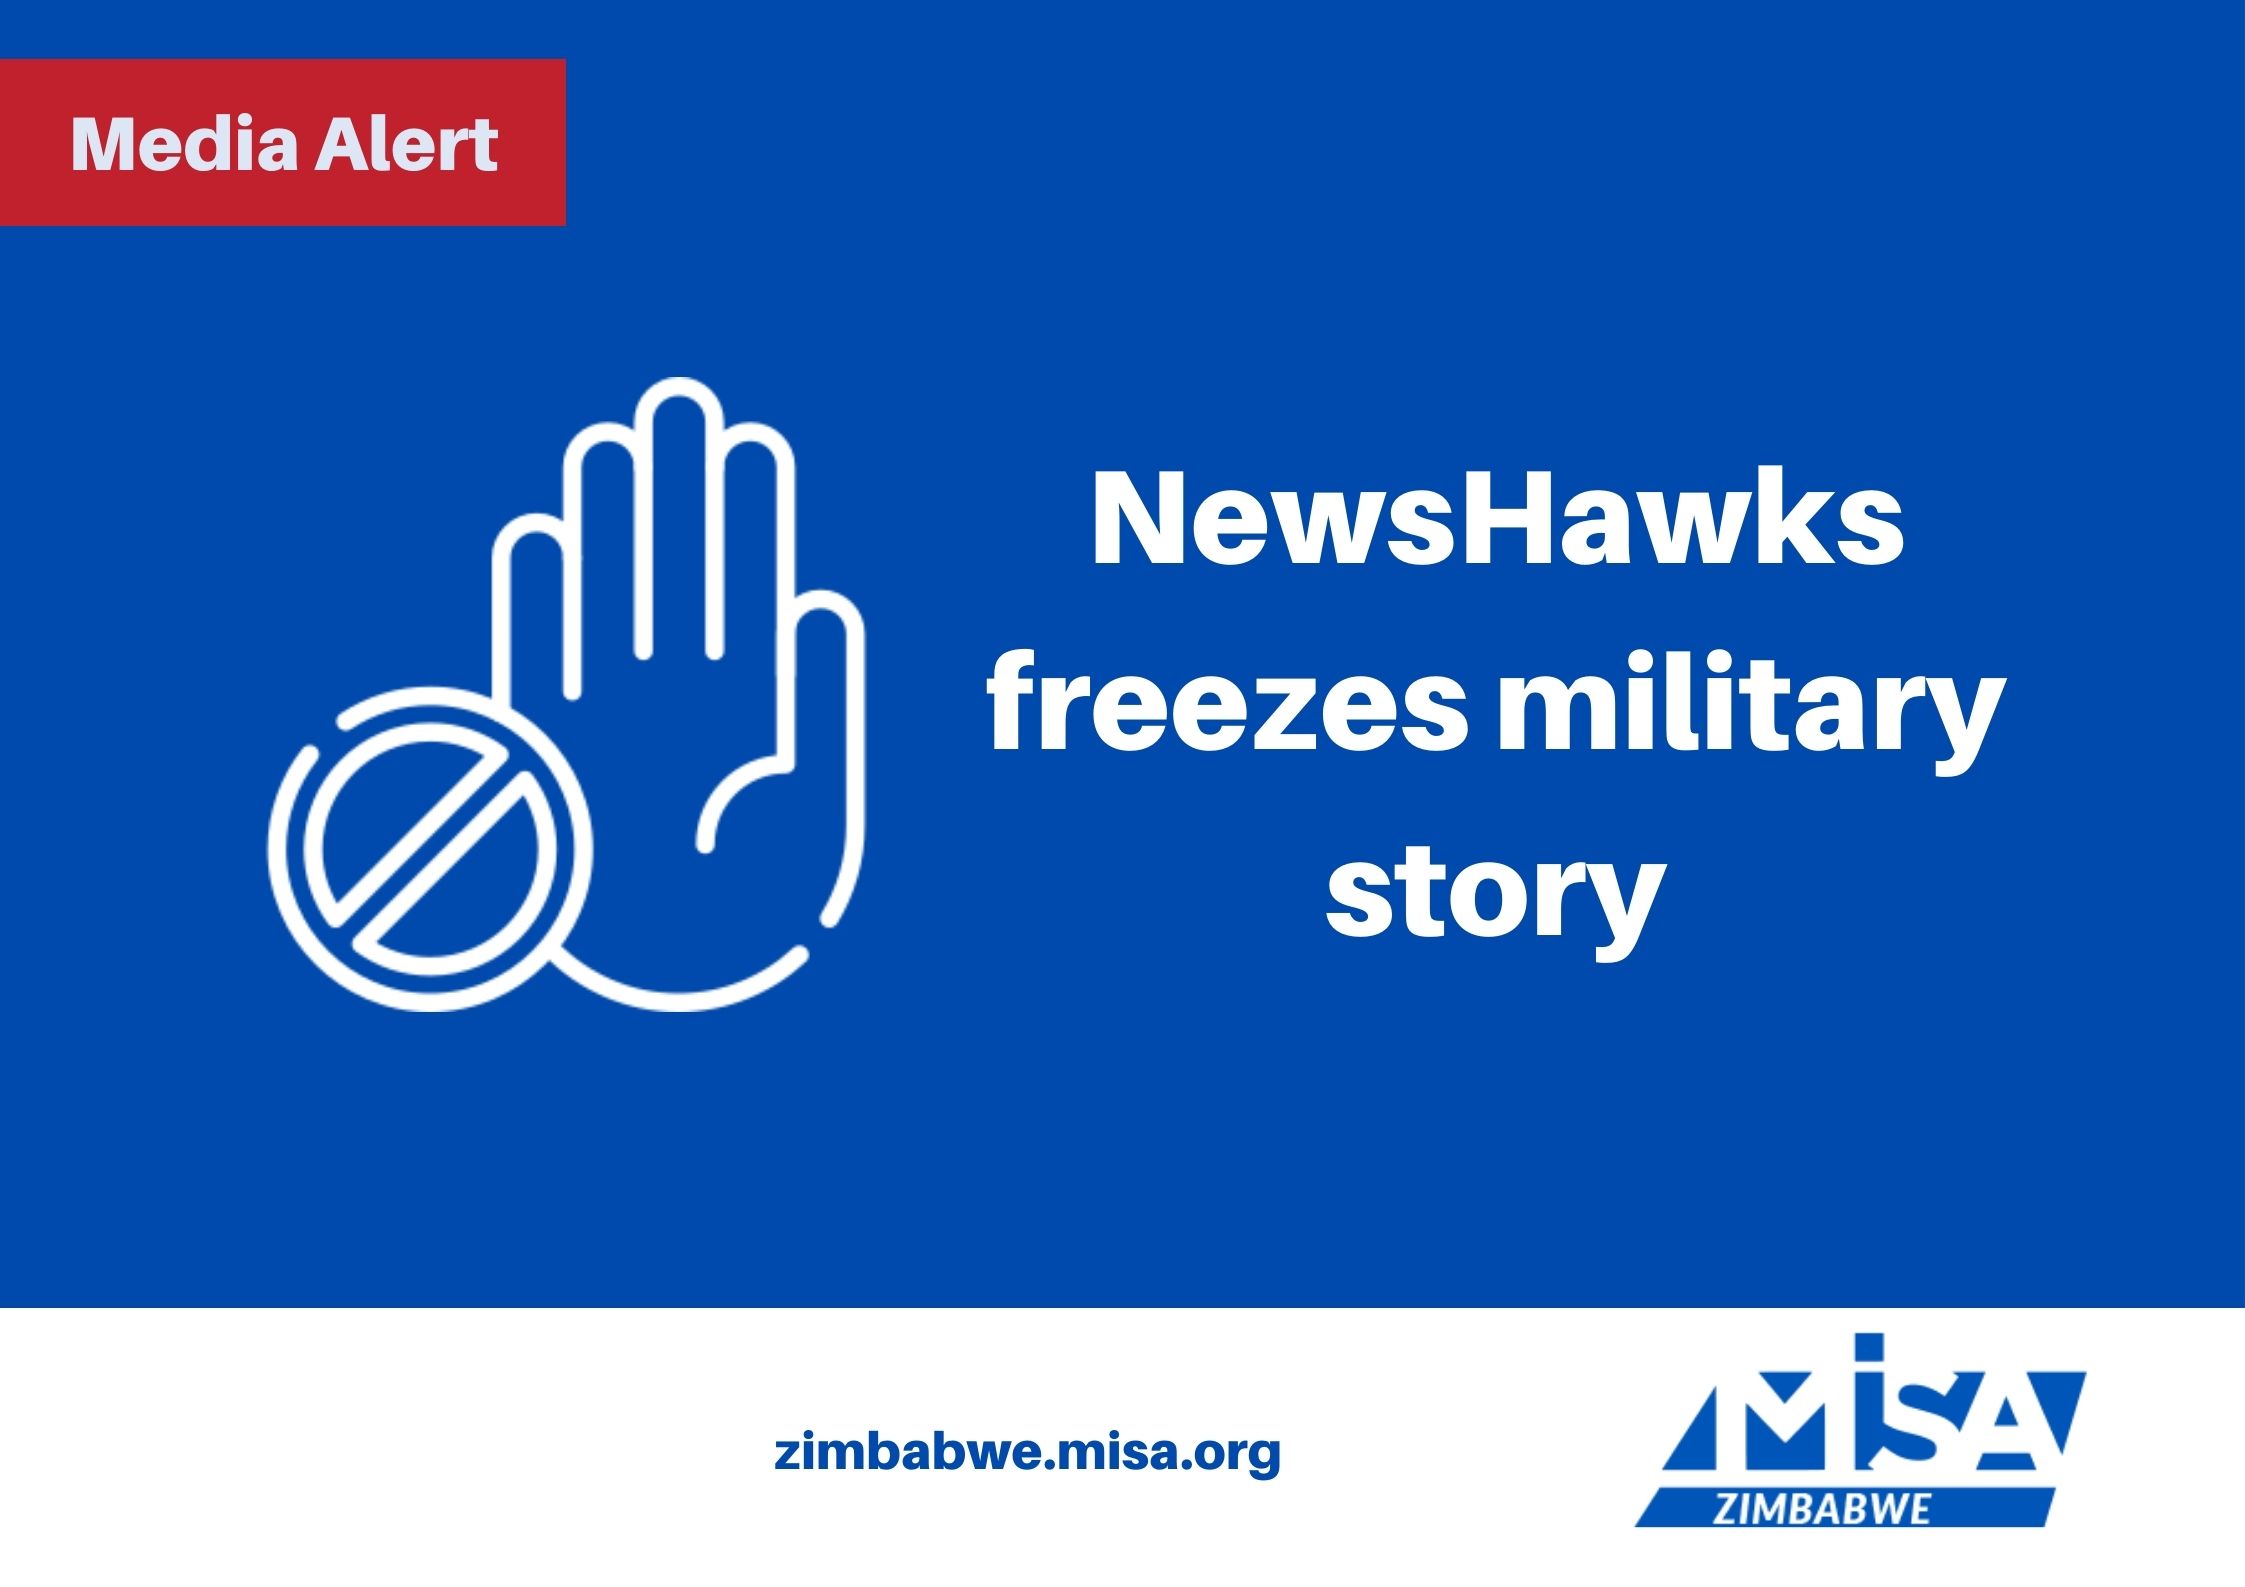 NewsHawks freezes military story